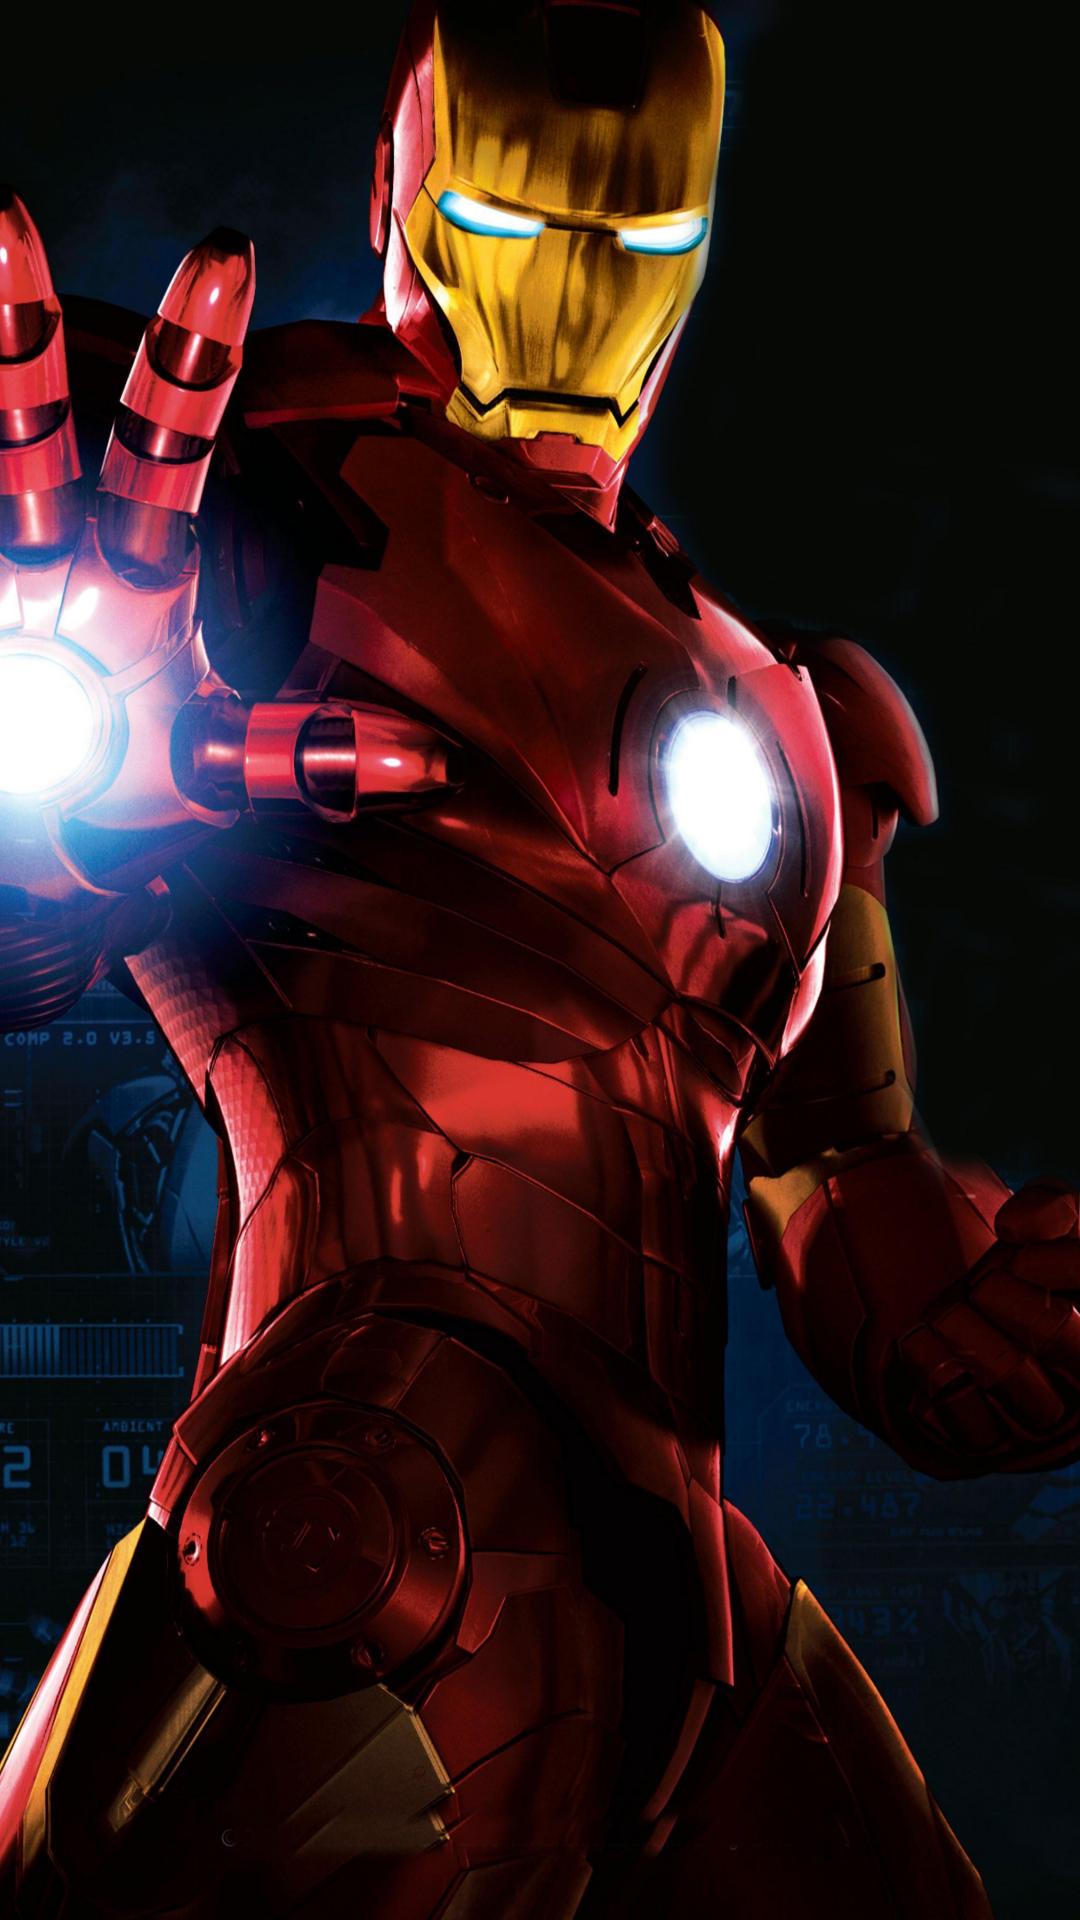 SuperHD.pics: Arc reactor Iron Man Tony Stark armor artwork ...